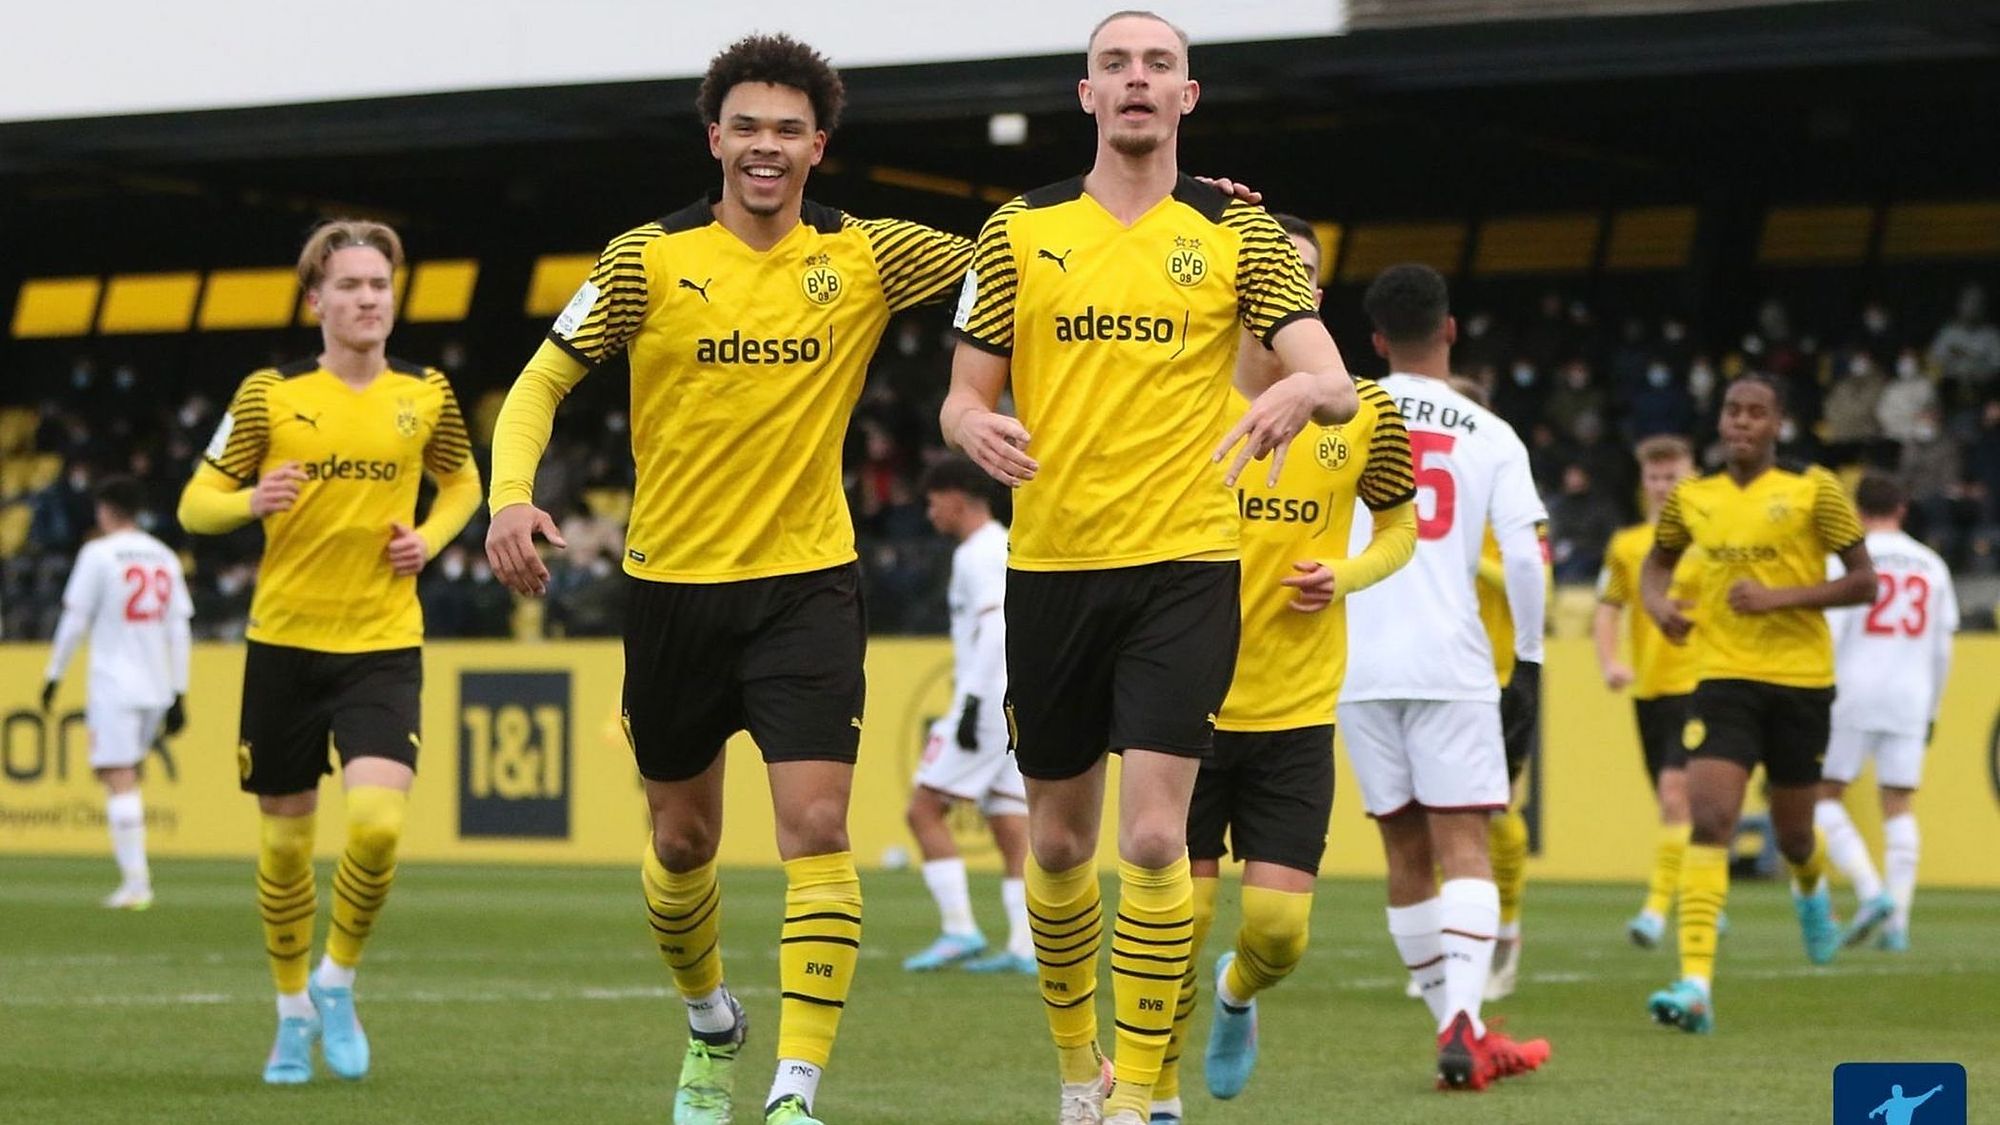 FC Dortmund 18 - FuPa